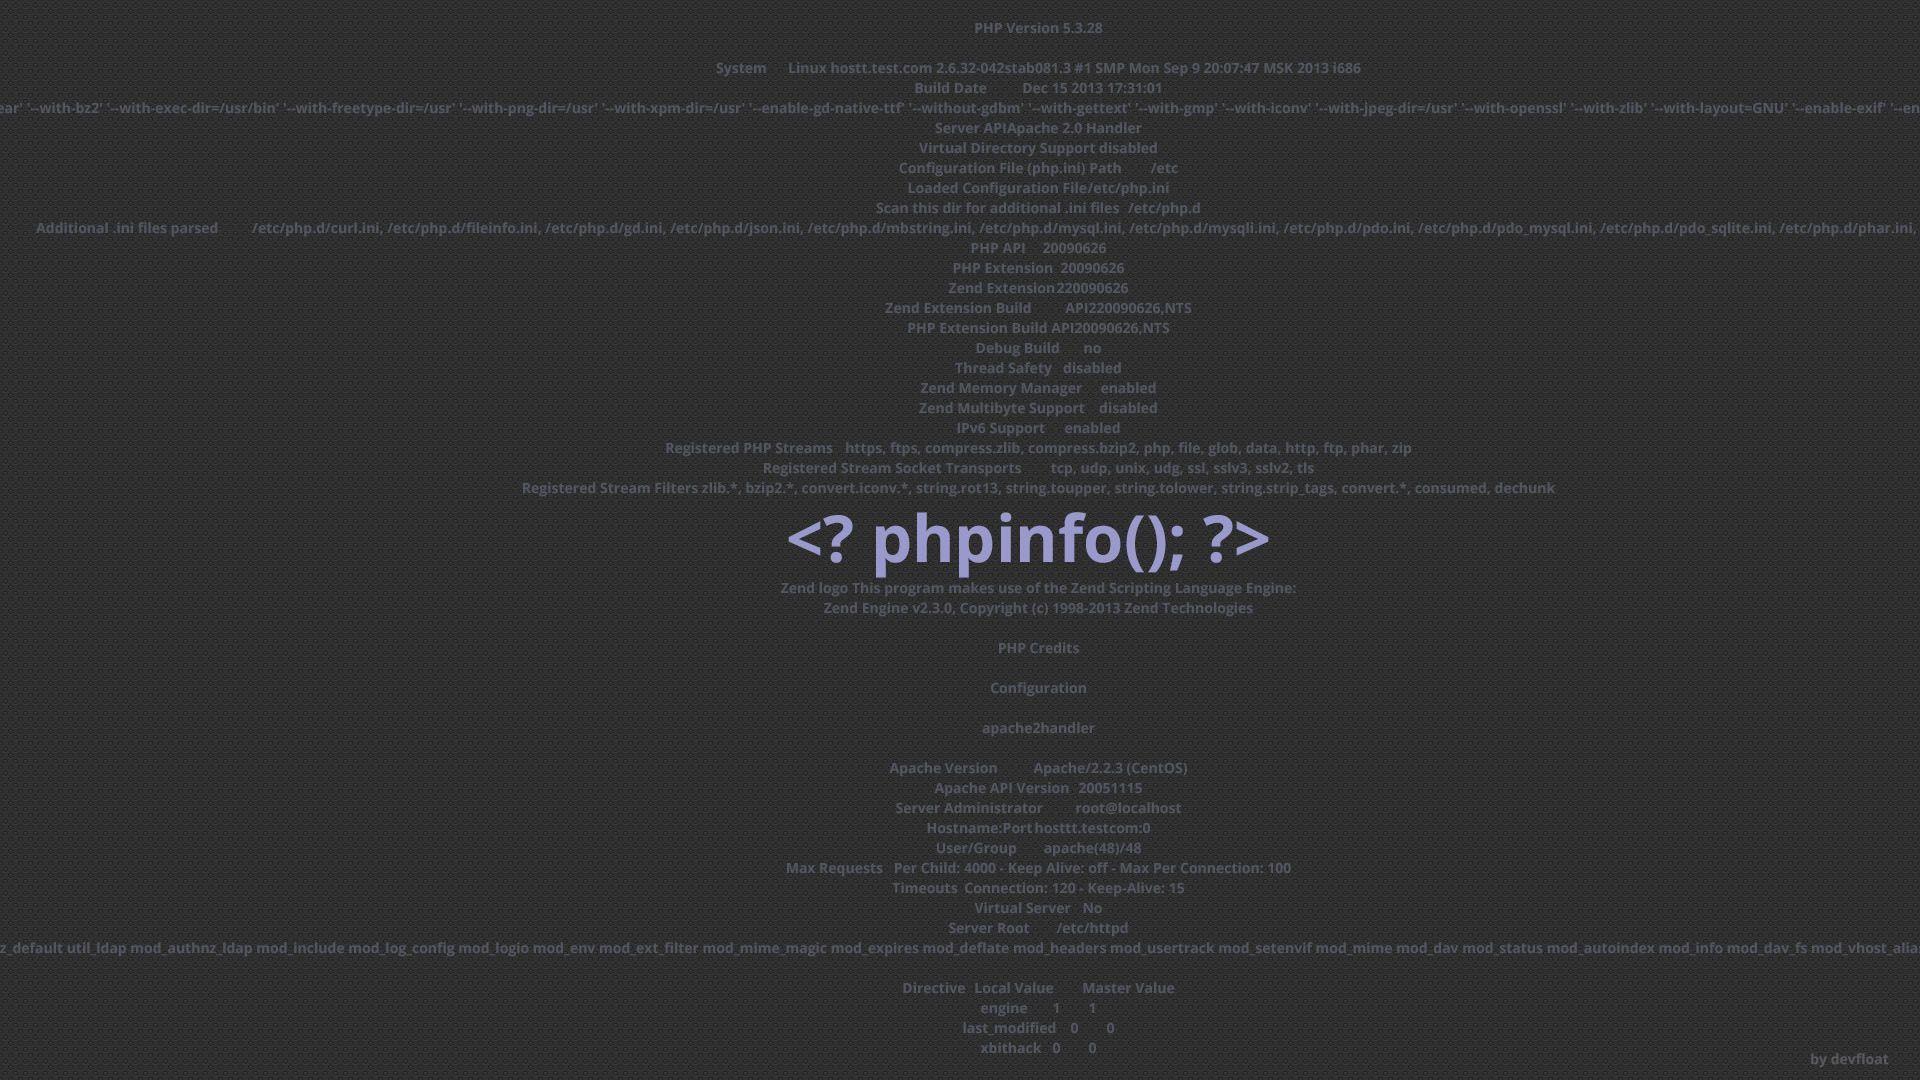 php code wallpaper hd